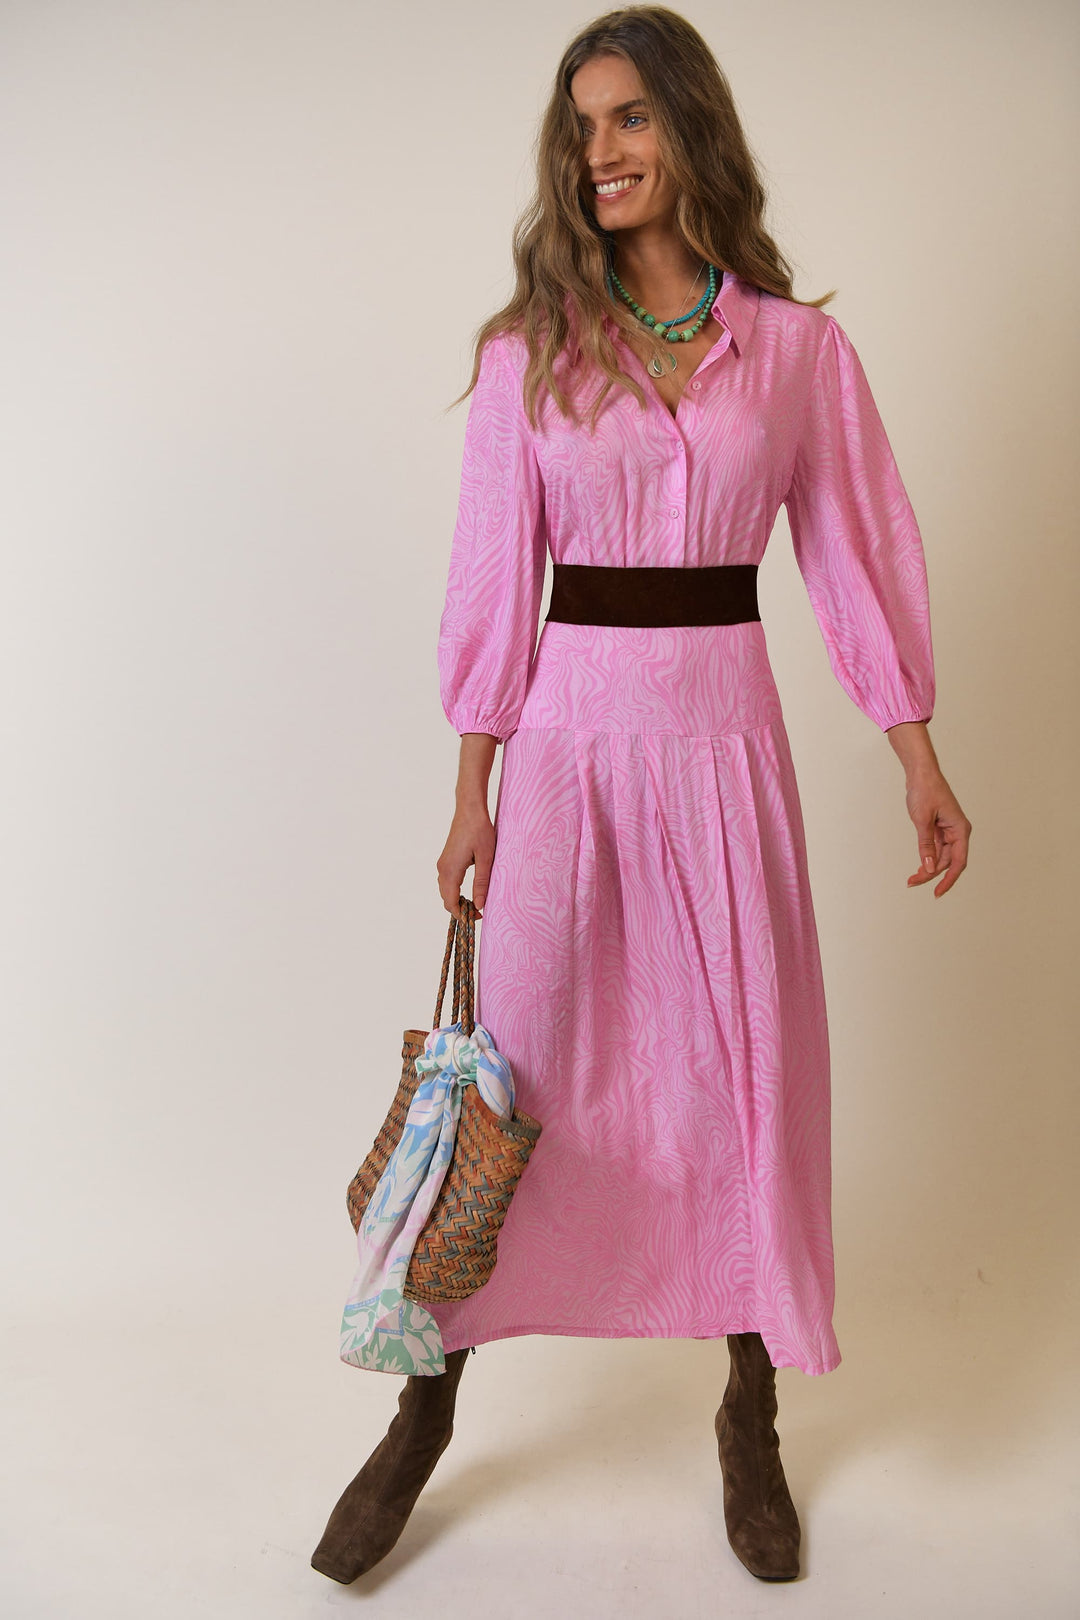 Duchess Kate: 'Izzy' Pink Marble Zebra Shirt Dress by Rixo